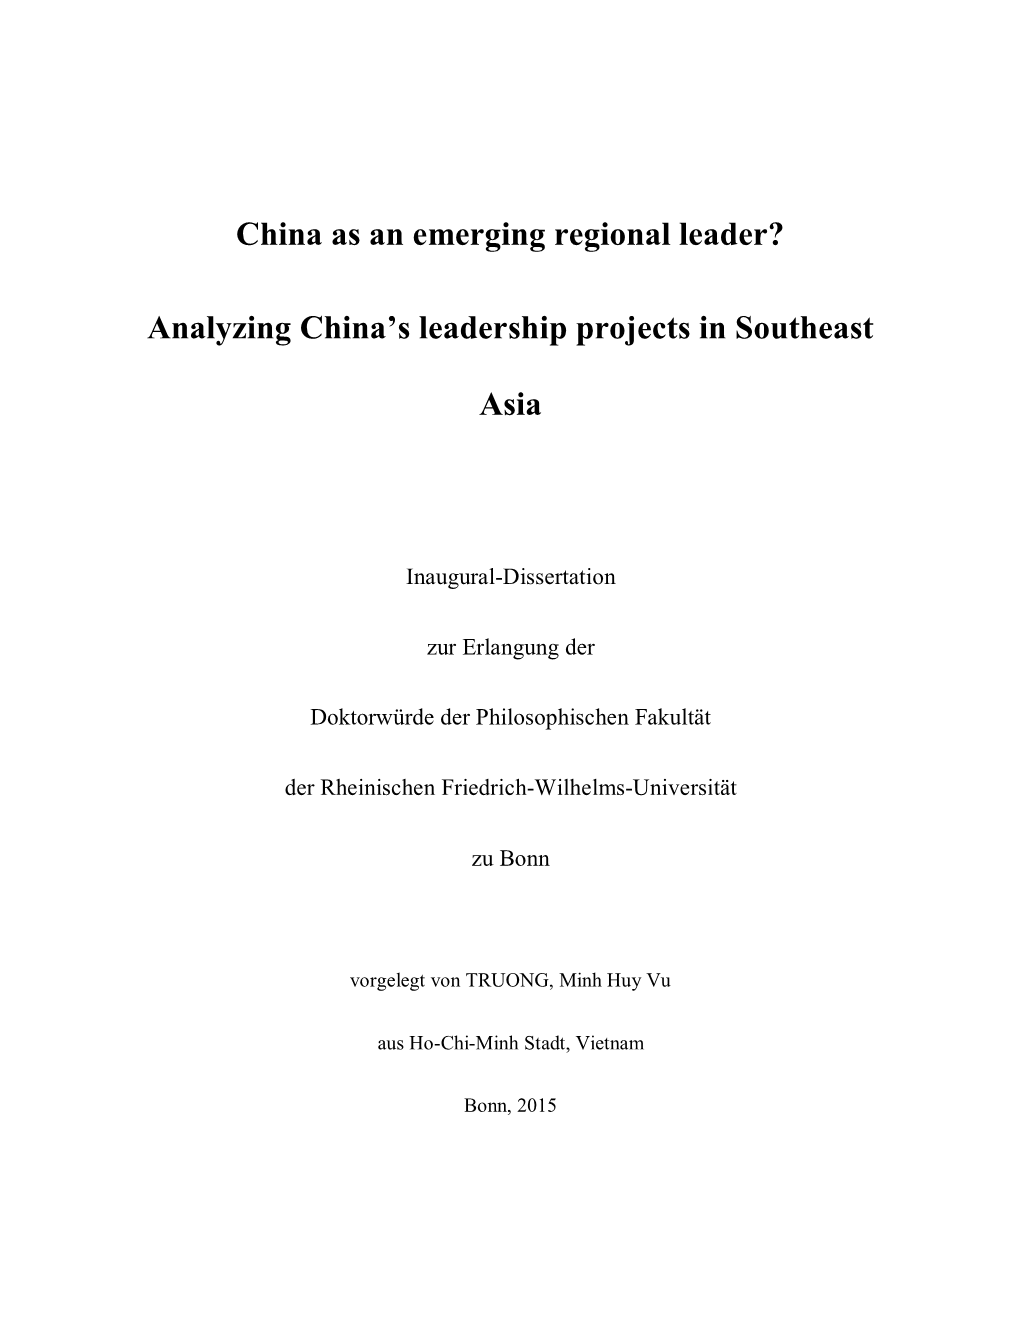 China As an Emerging Regional Leader?